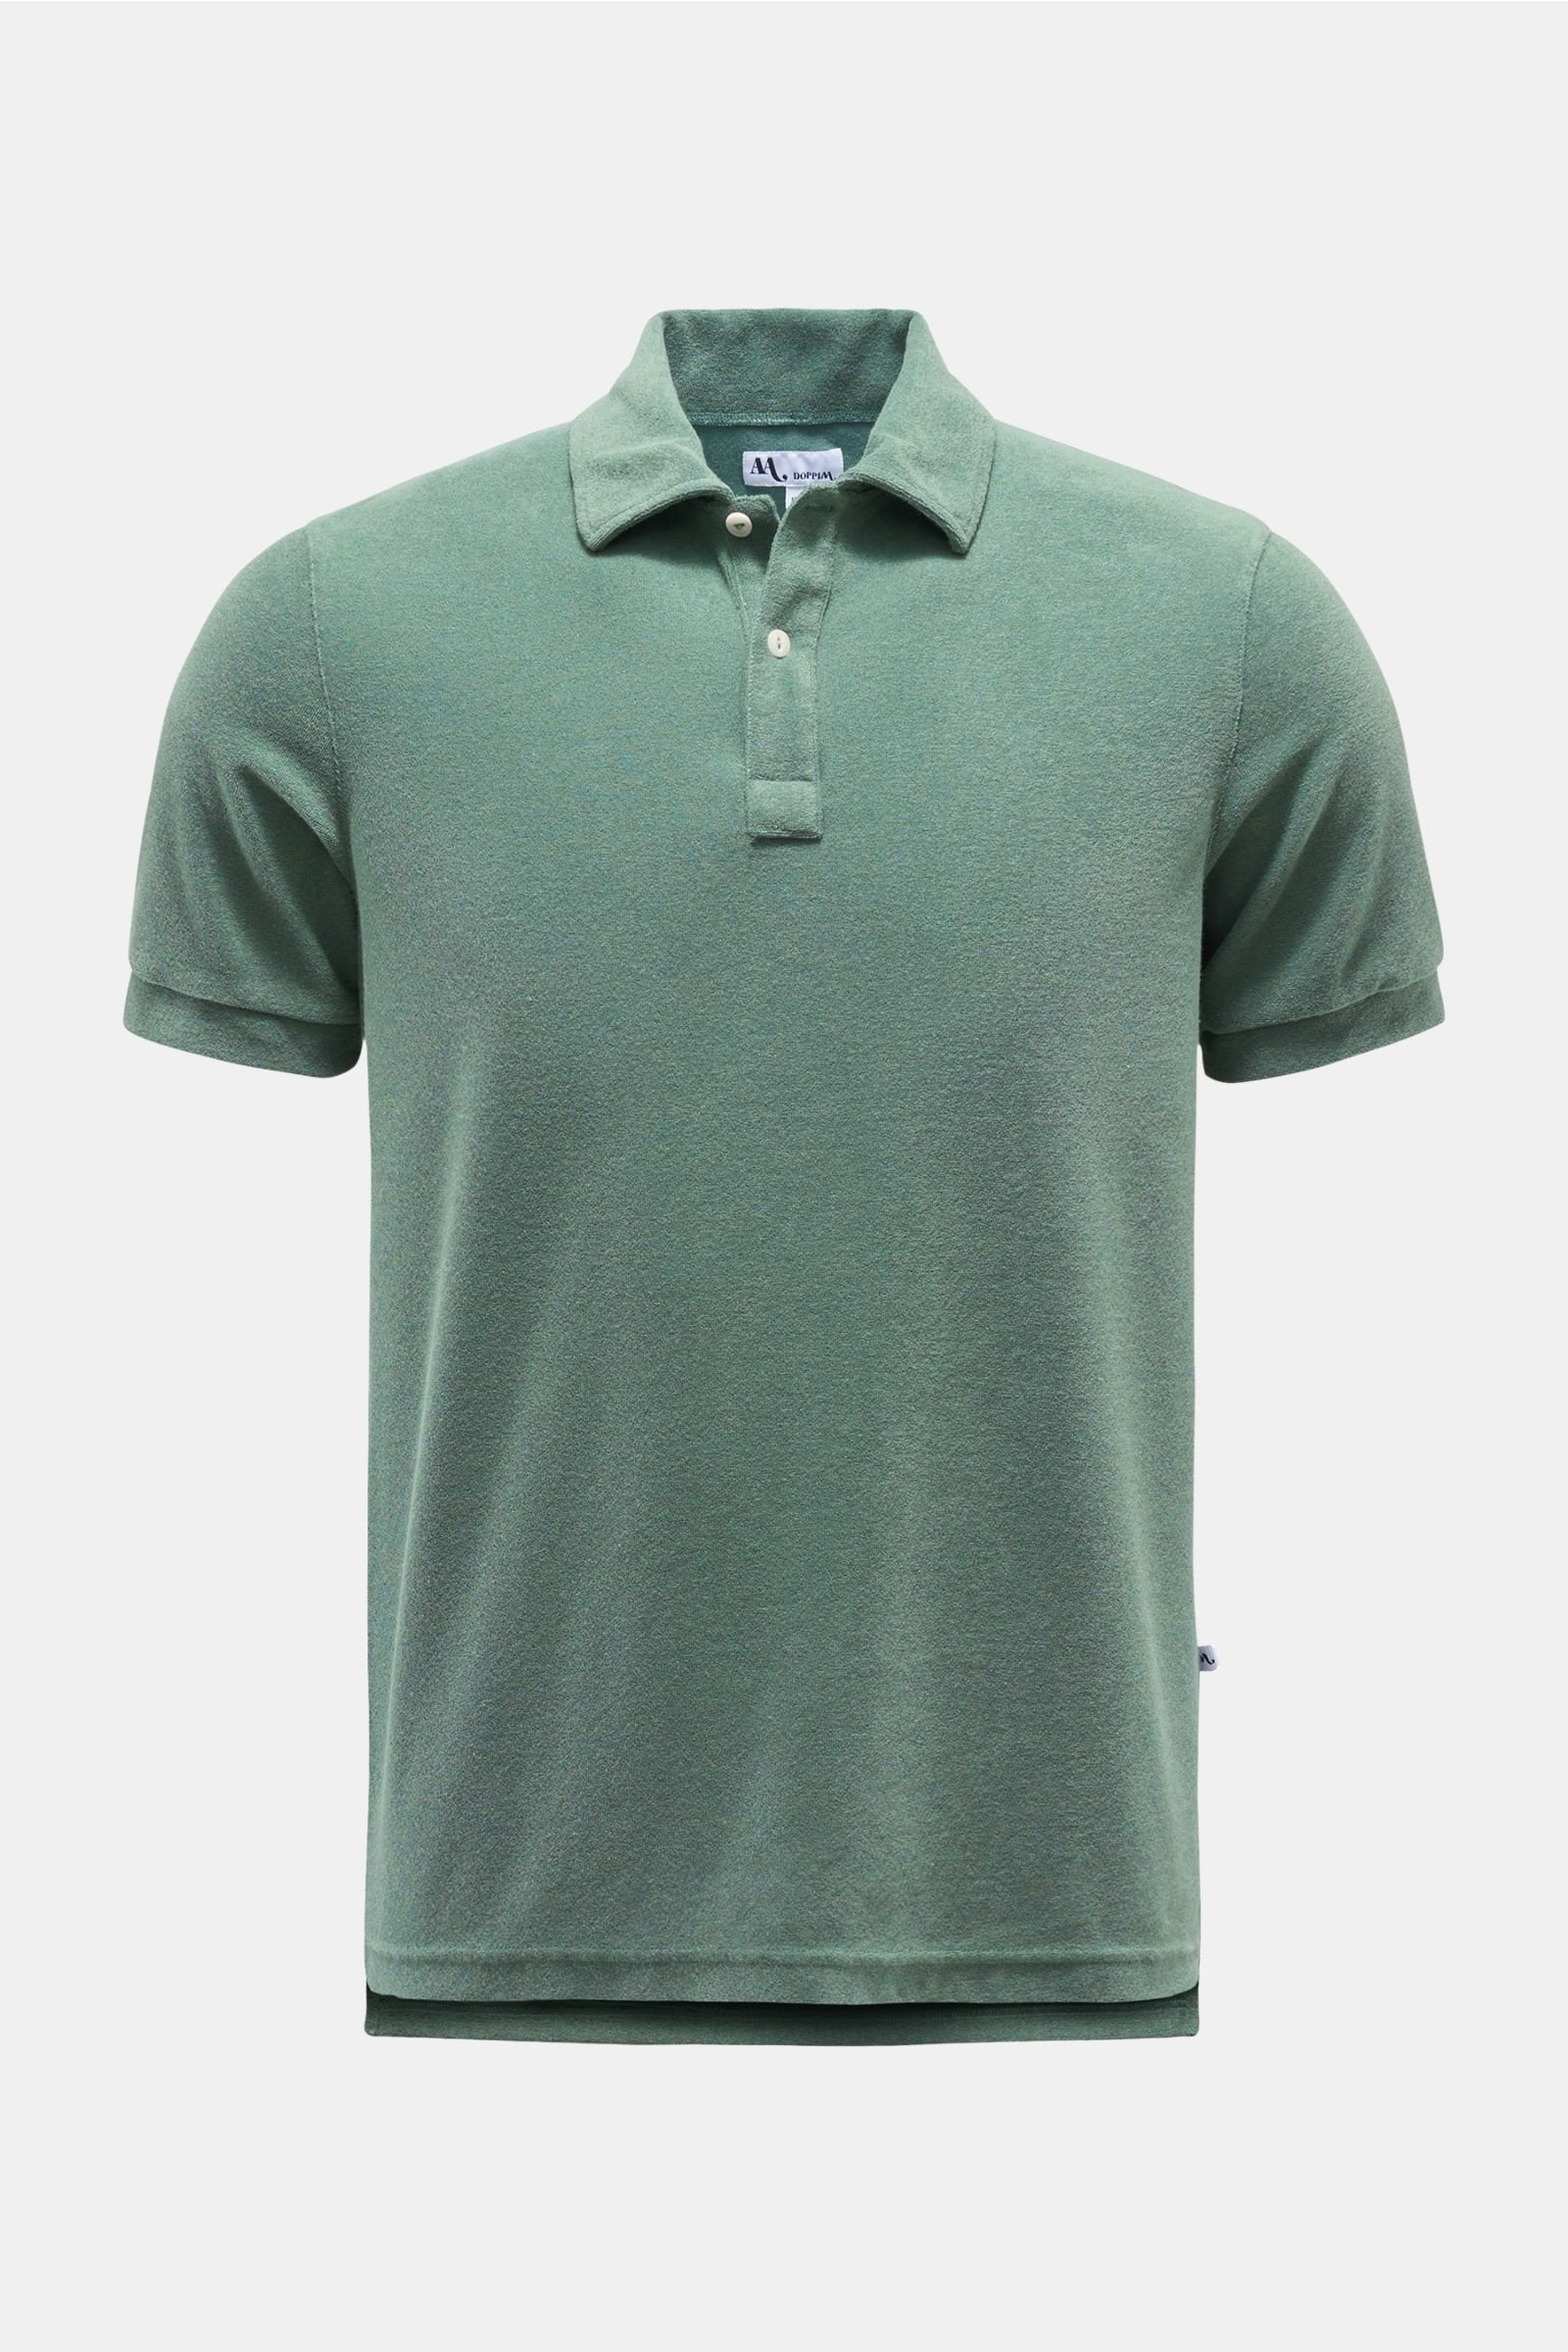 Terry polo shirt 'Aandau' grey green